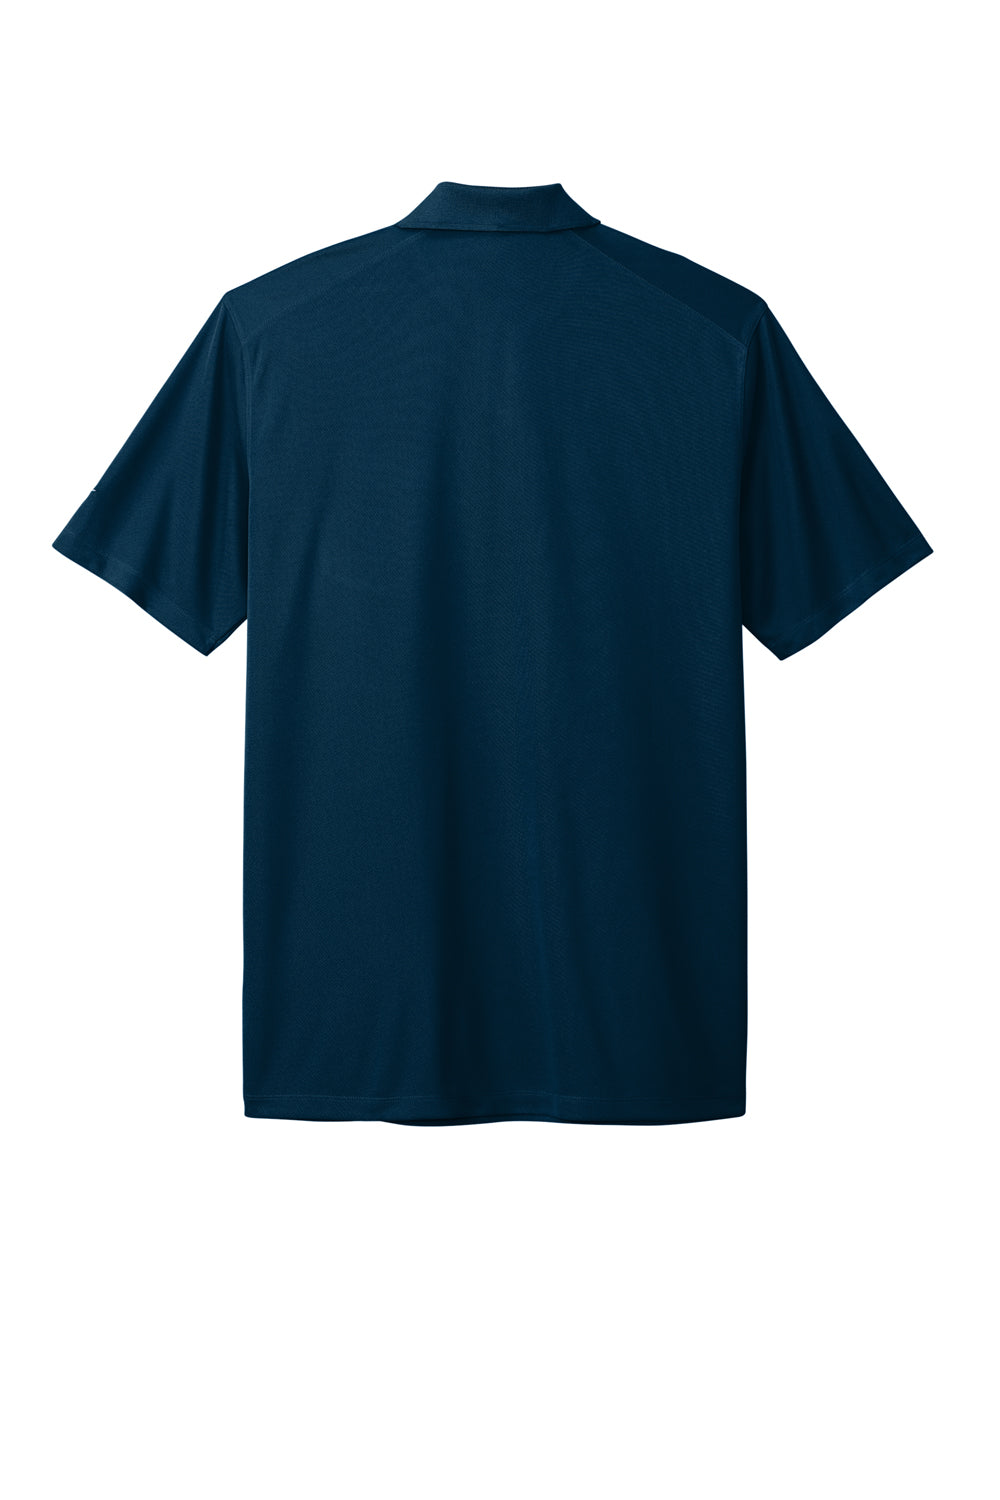 Nike NKDC2103 Mens Dri-Fit Moisture Wicking Micro Pique 2.0 Short Sleeve Polo Shirt w/ Pocket Navy Blue Flat Back